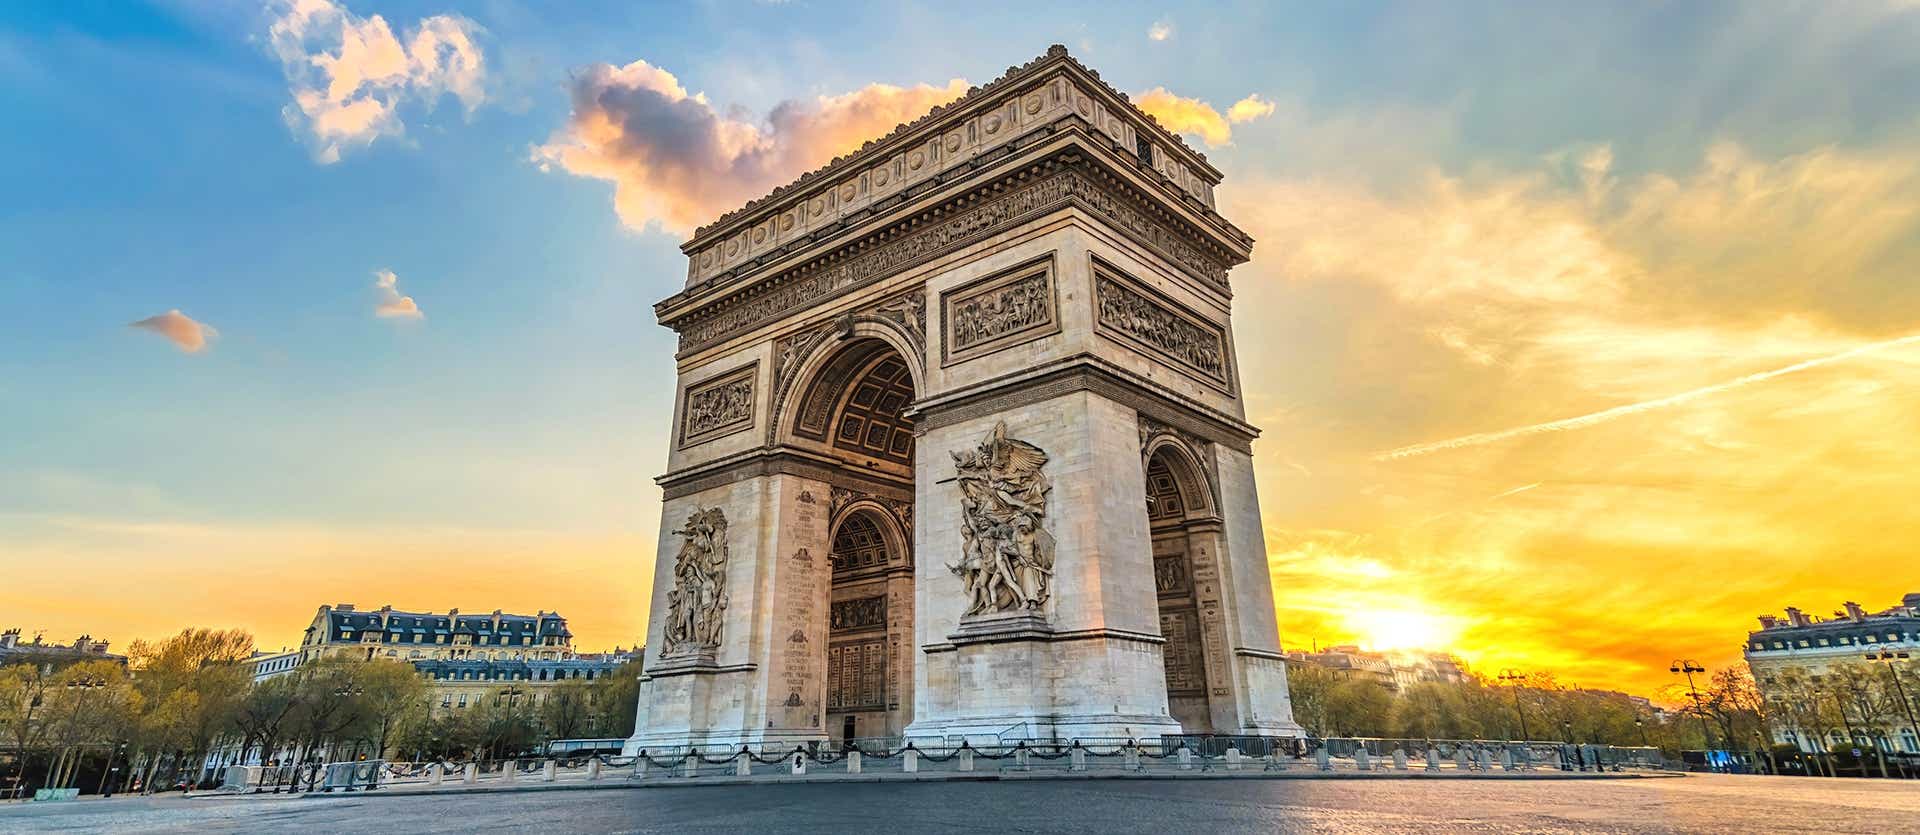 Arc de Triomphe and Champs Elysees <span class="iconos separador"></span> Paris